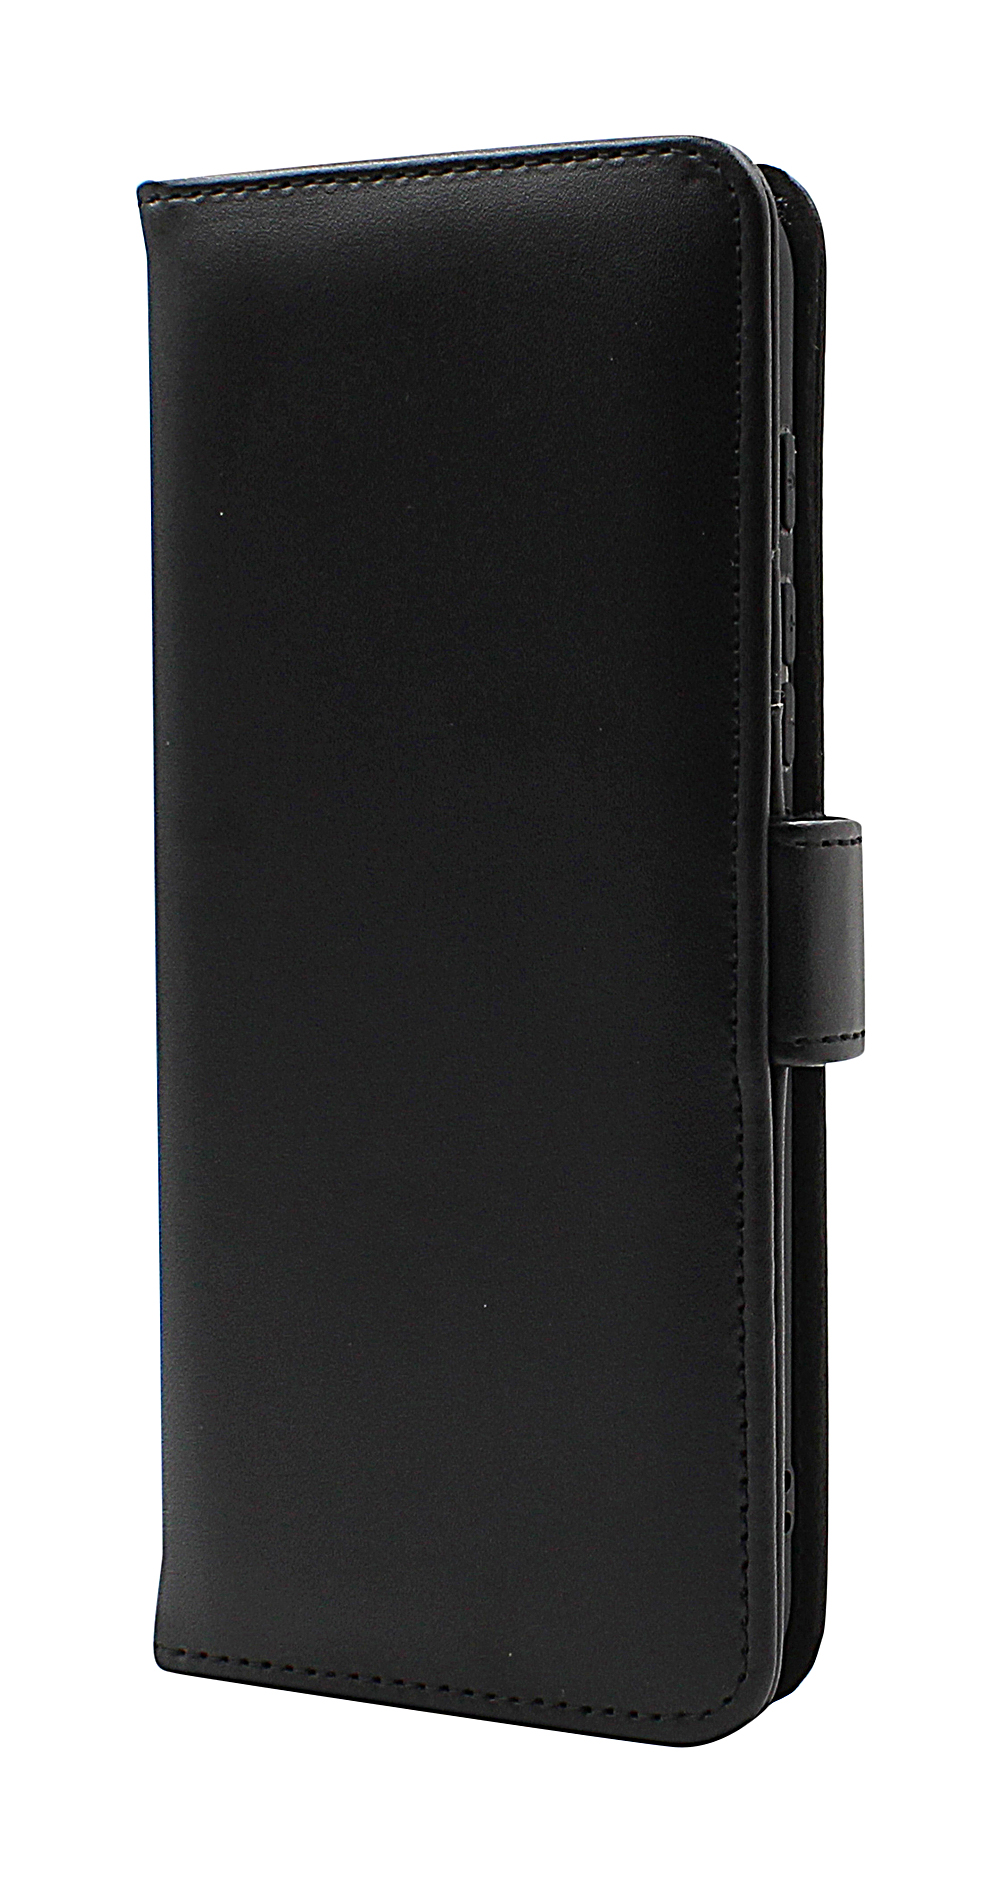 Skimblocker Mobiltaske Motorola Moto G71